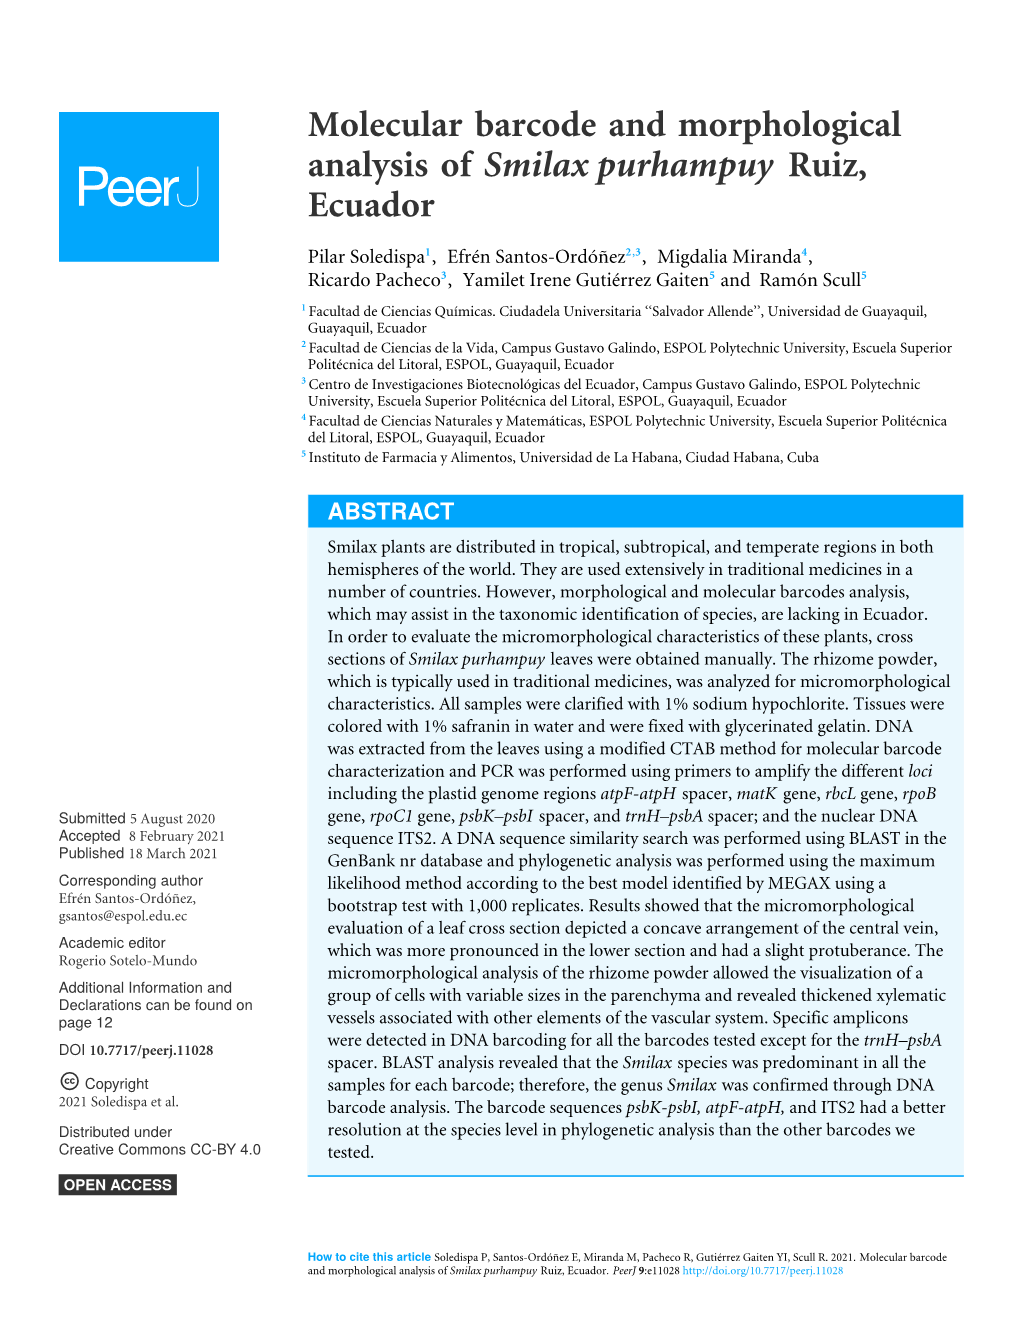 Molecular Barcode and Morphological Analysis of Smilax Purhampuy Ruiz, Ecuador